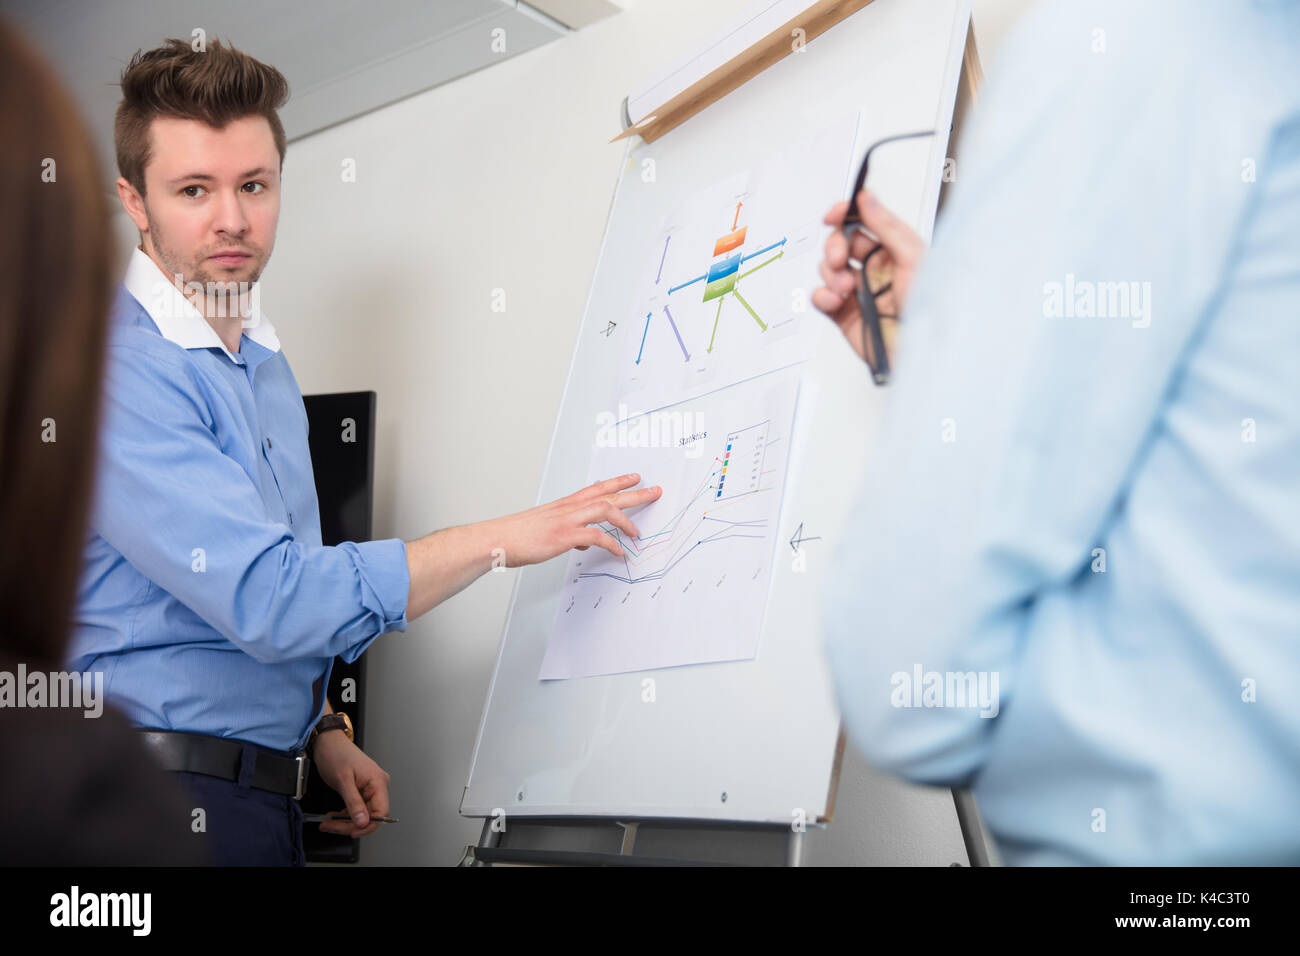 Businessman Touching Document On Flipchart While Giving Presenta Stock Photo